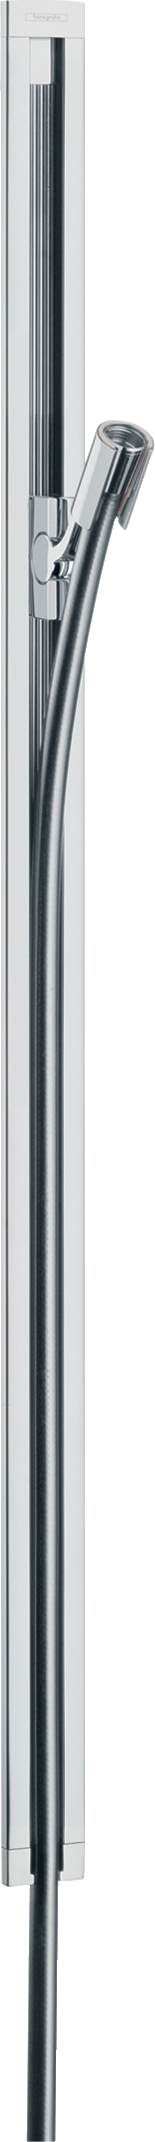 Unica Shower bar Raindance 90 cm with Isiflex shower hose 160 cm